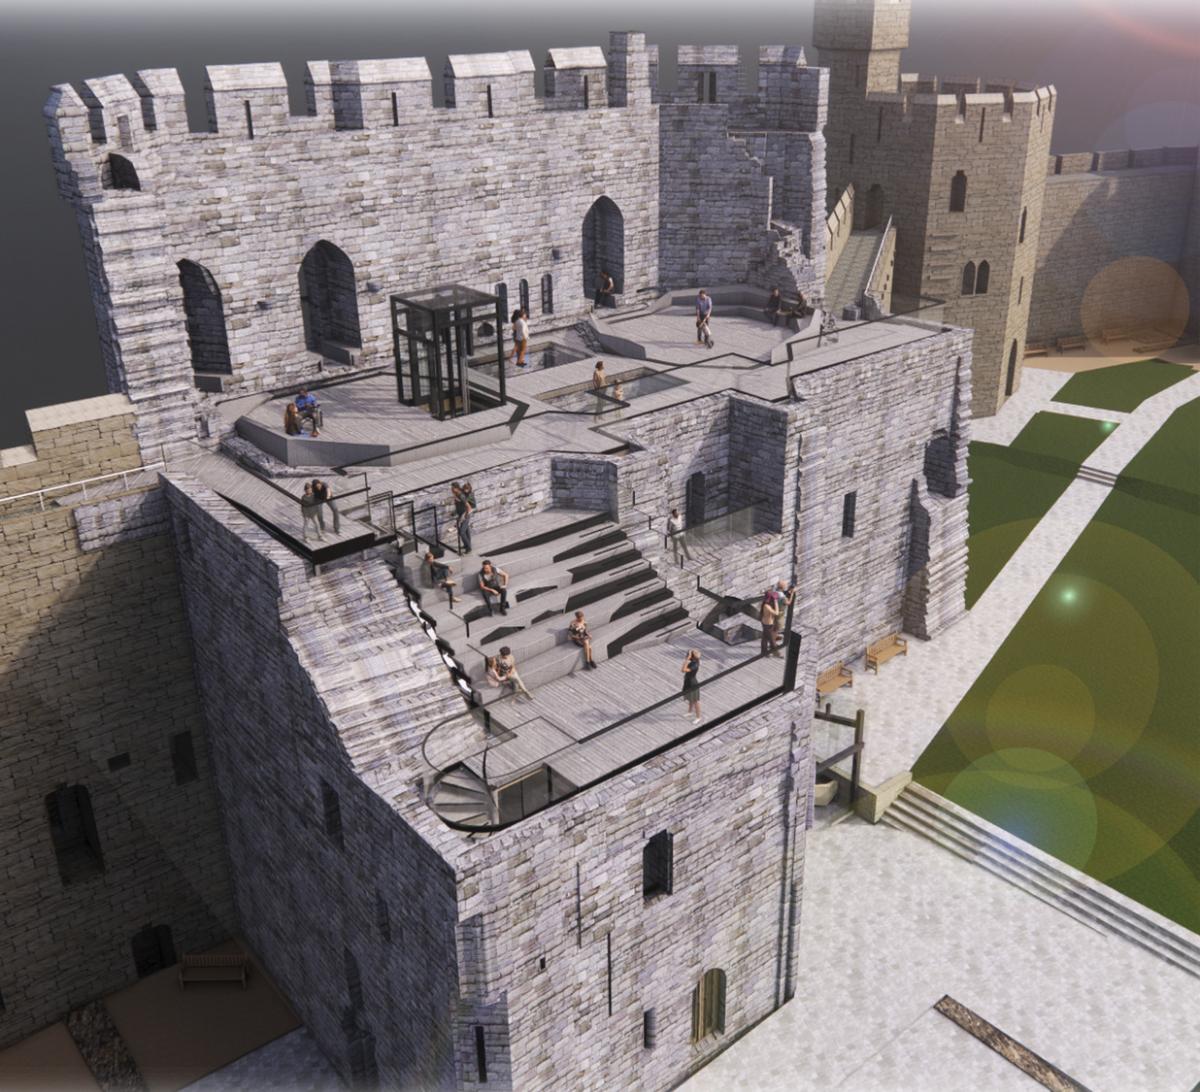 visual of caernarfon castle, grey brick platform with descending stairs to lower platform